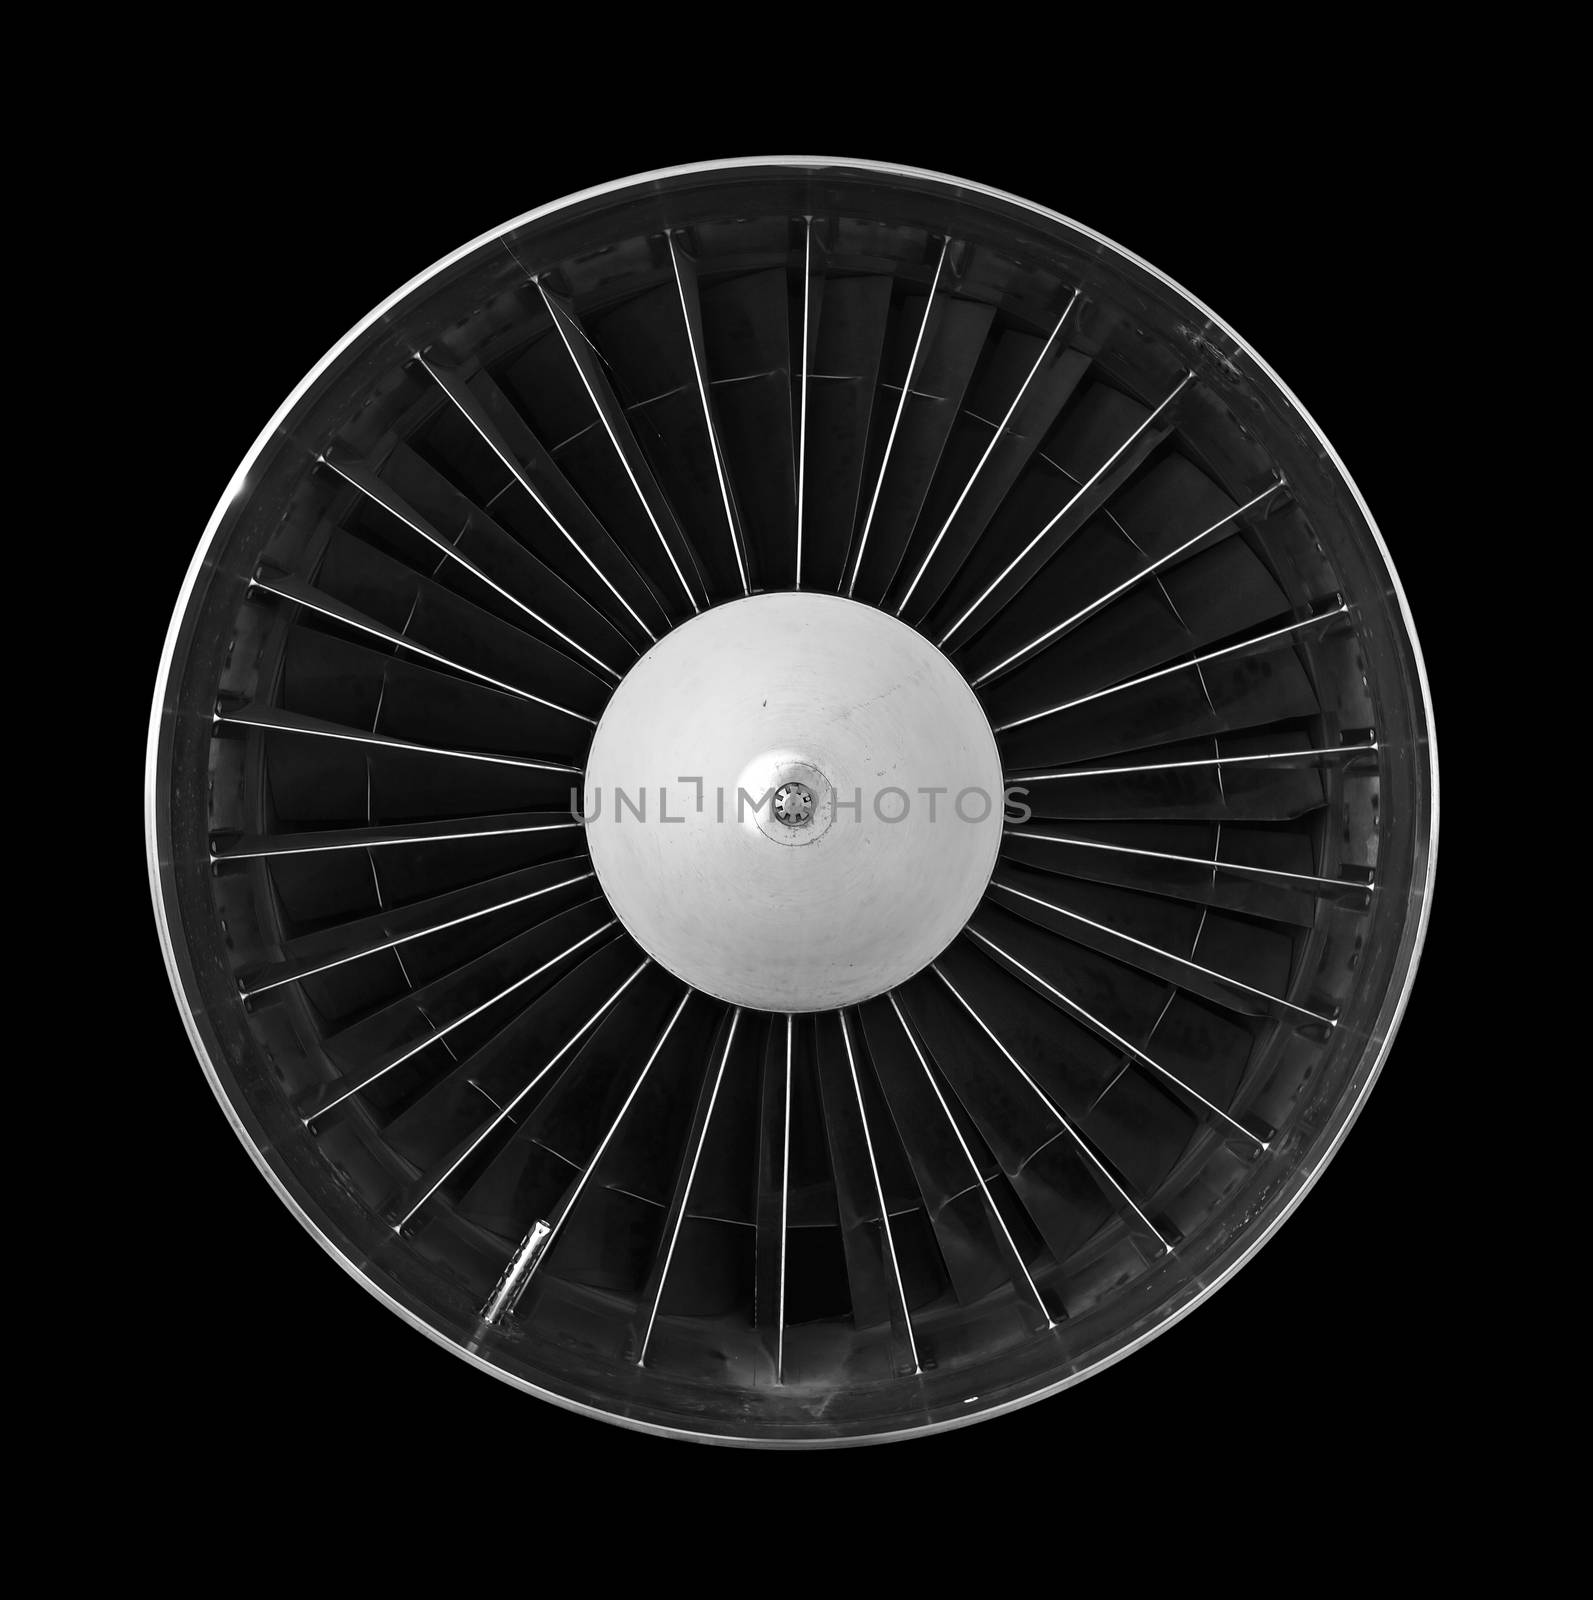 Jet turbine detail on black background